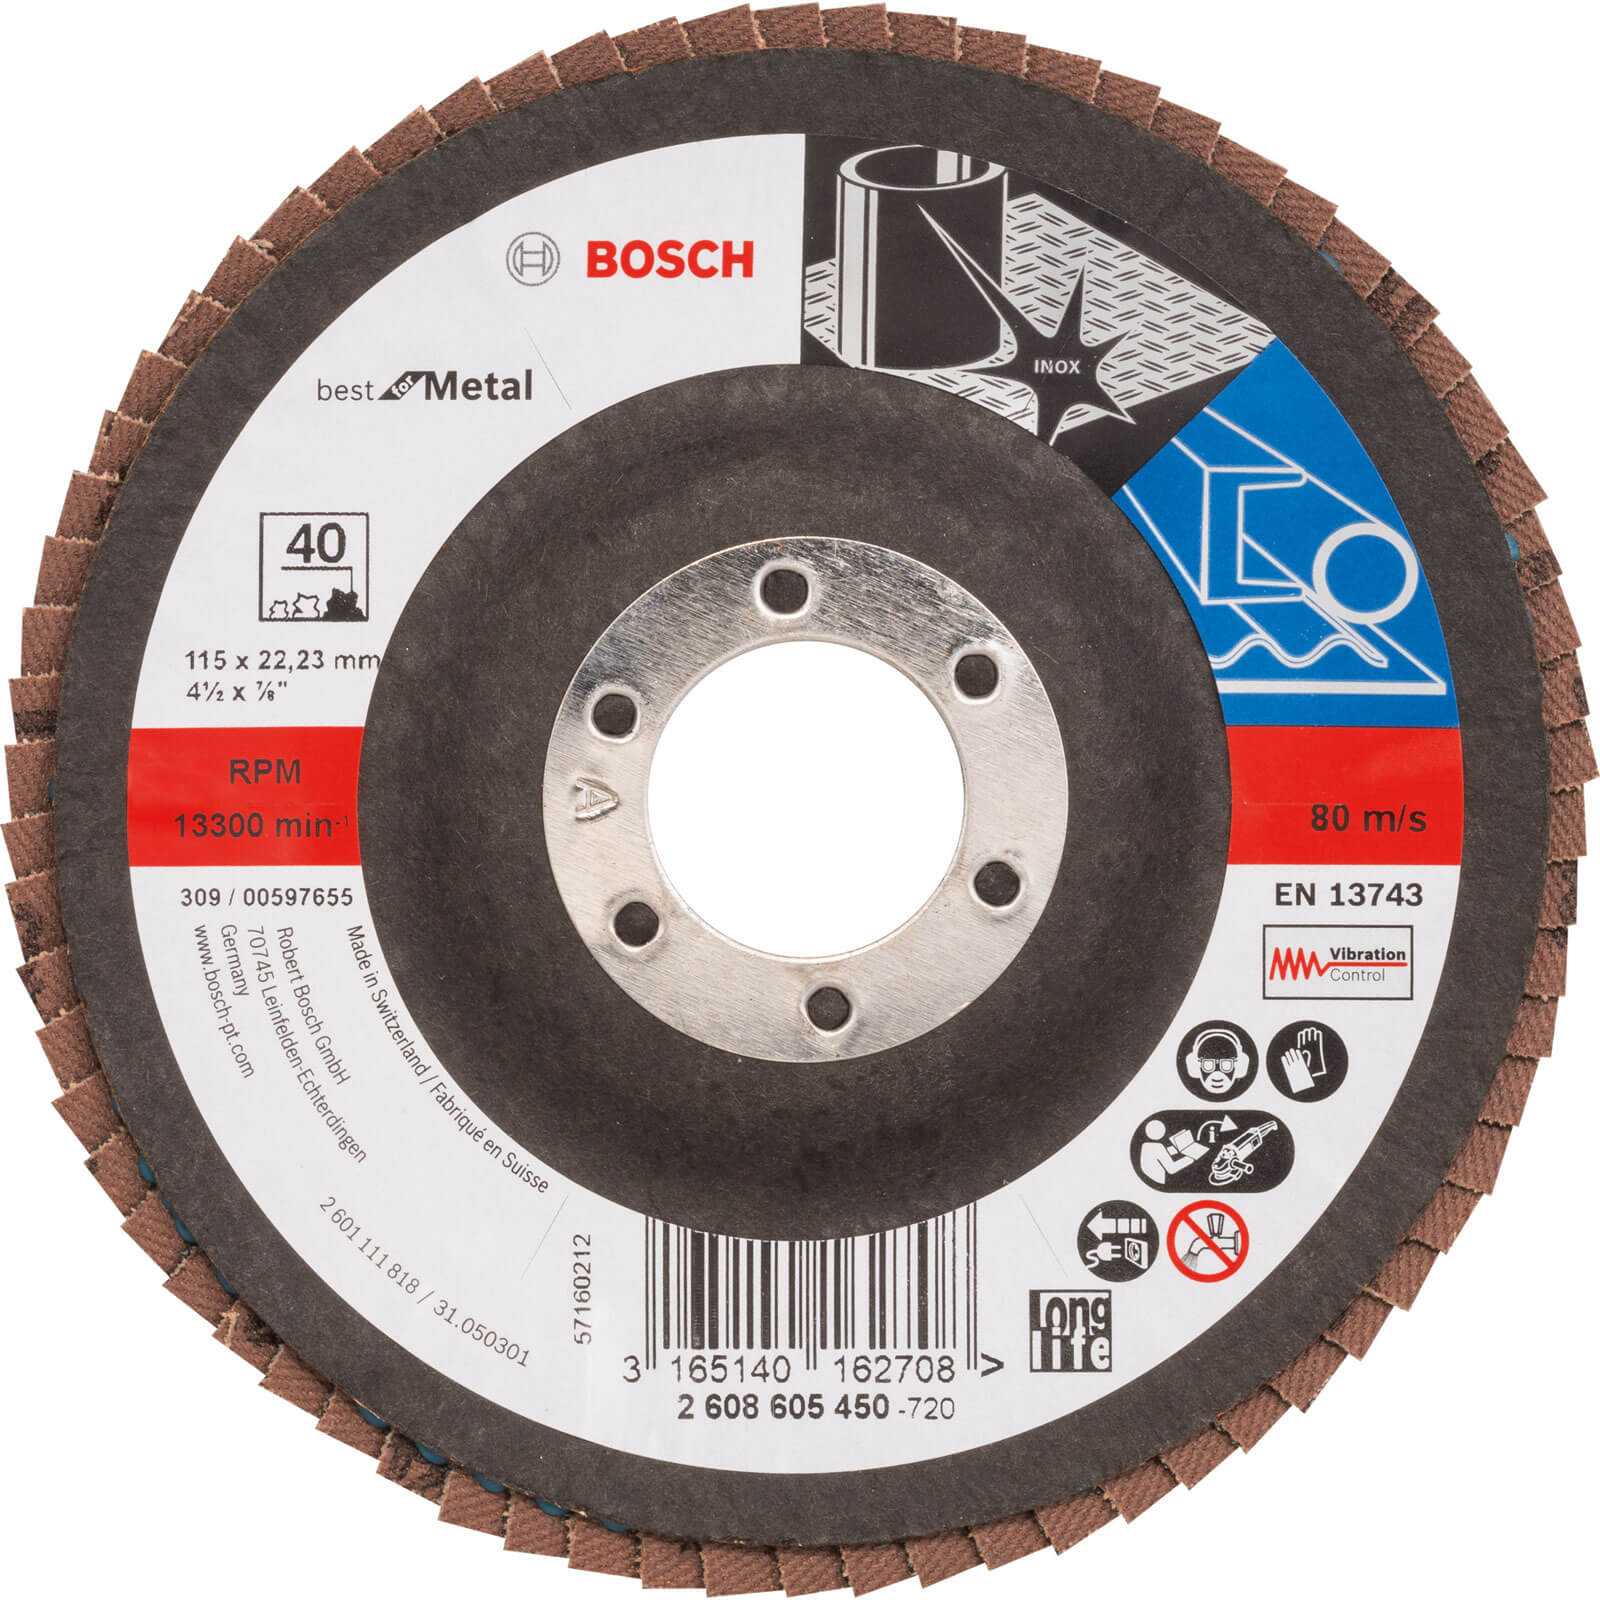 Photo of Bosch Zirconium Abrasive Flap Disc 115mm 40g